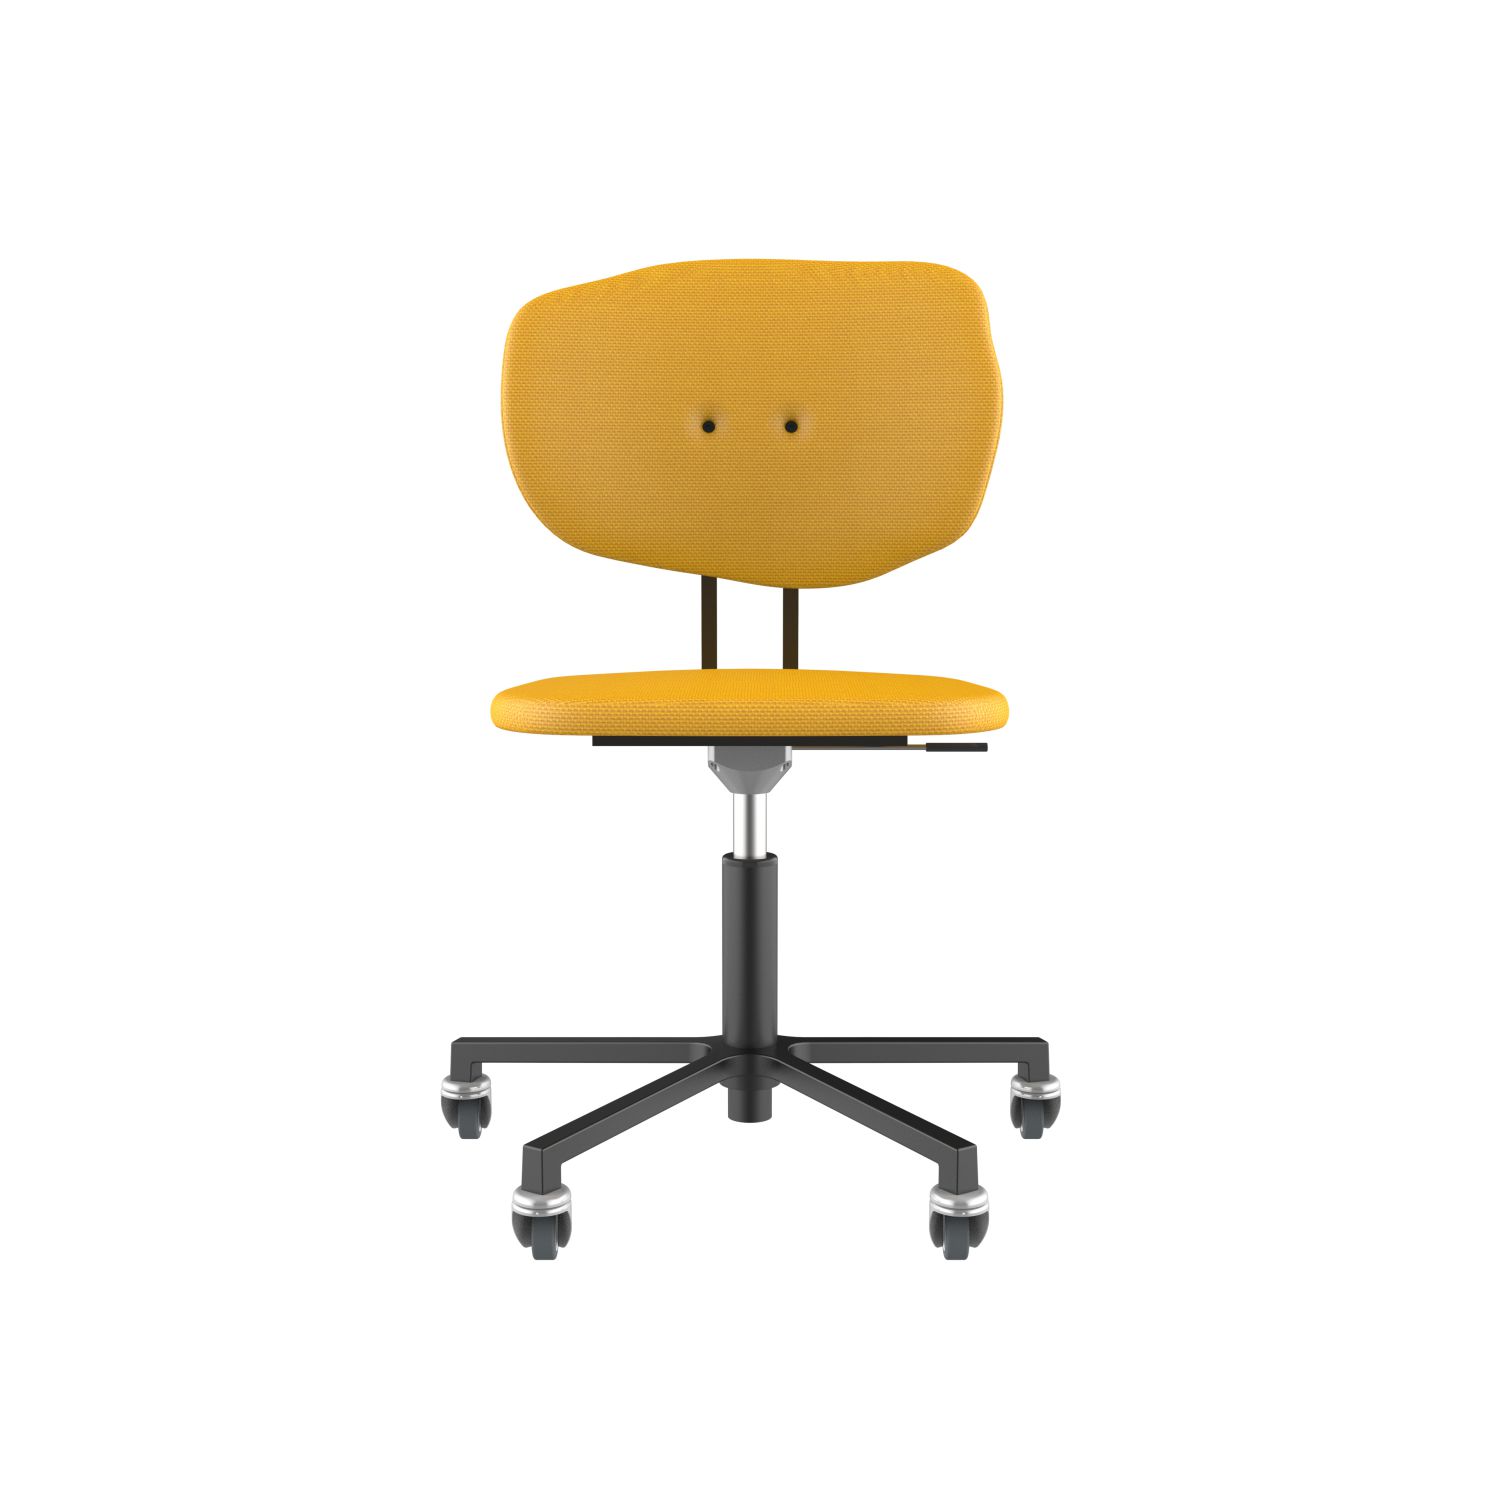 lensvelt maarten baas office chair without armrests backrest f lemon yellow 051 black ral9005 soft wheels